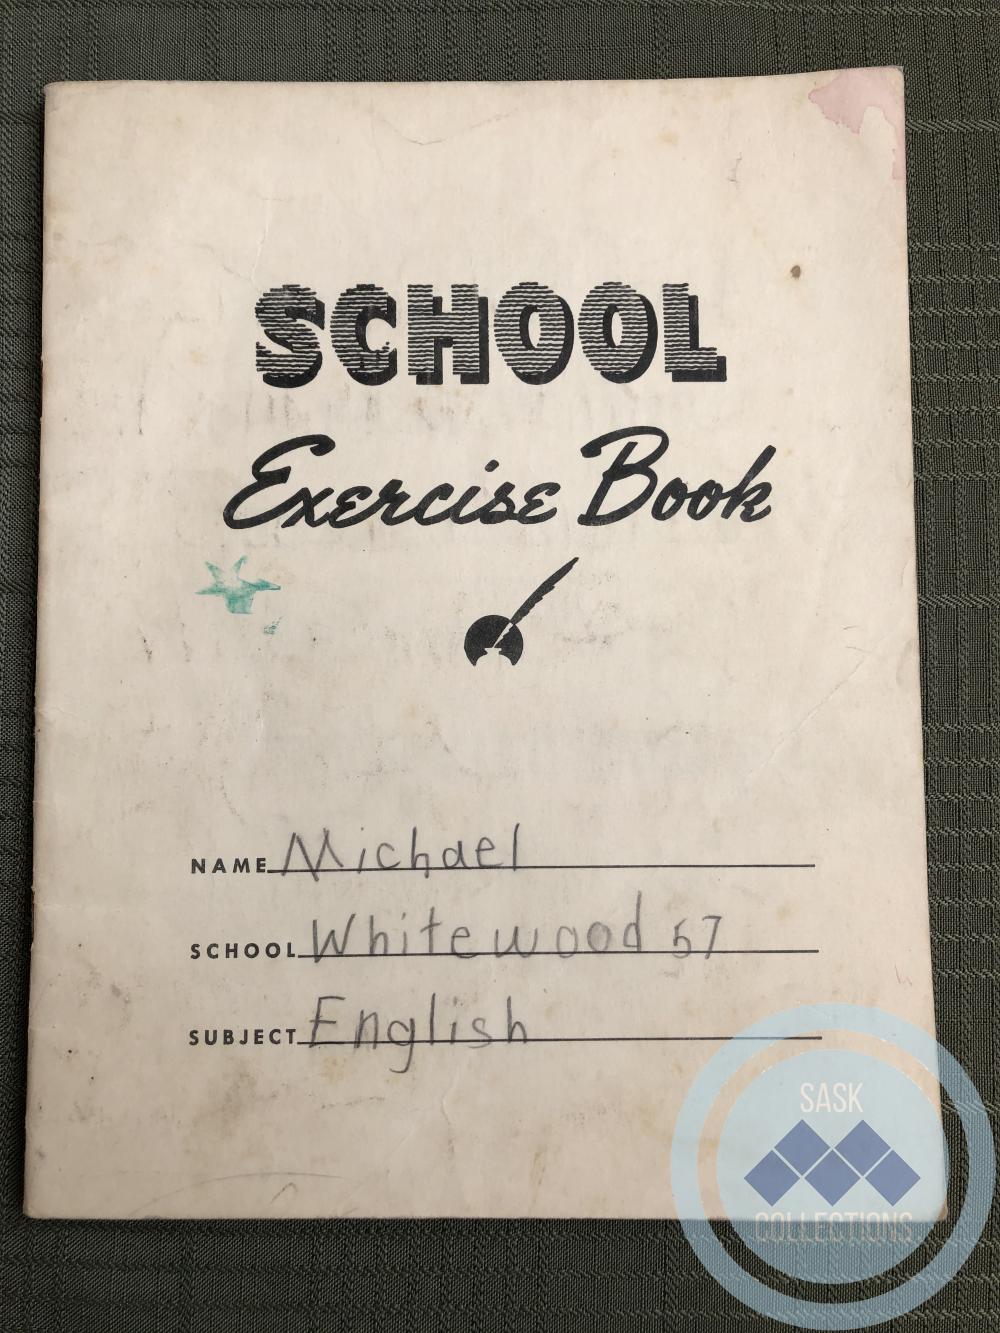 Exercise Book - English